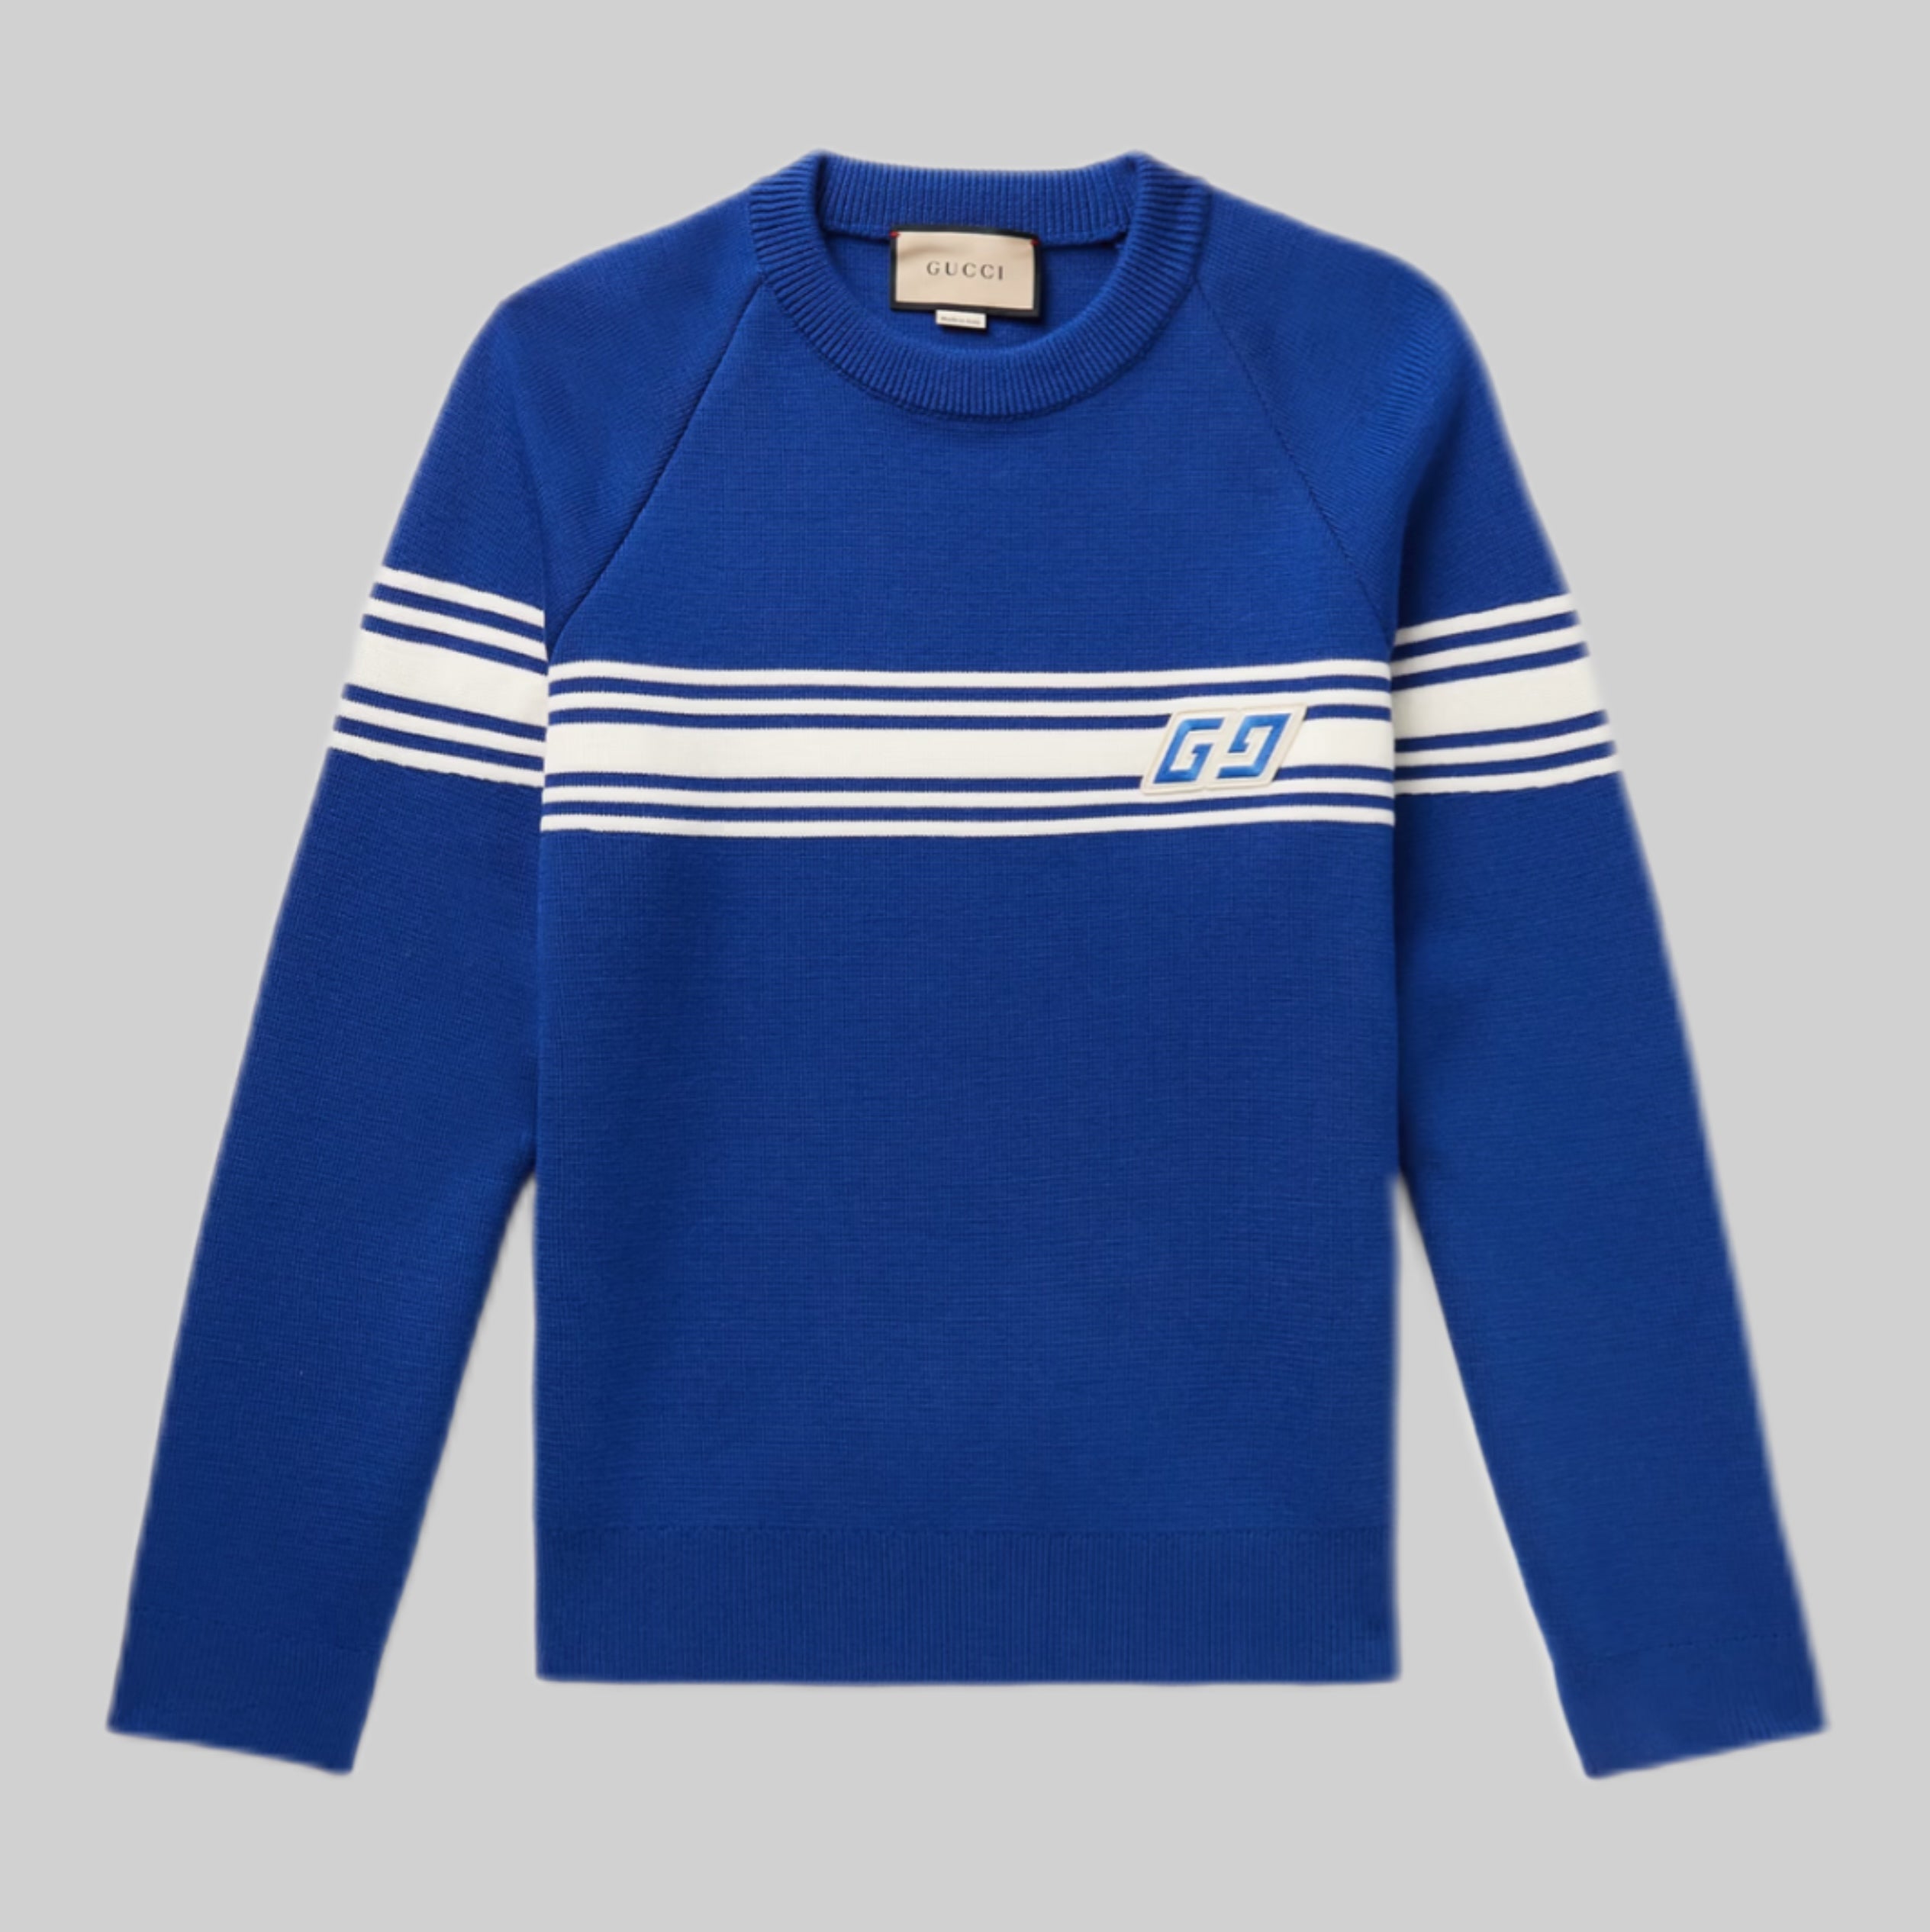 GUCCI sweater, blue, frontside, men